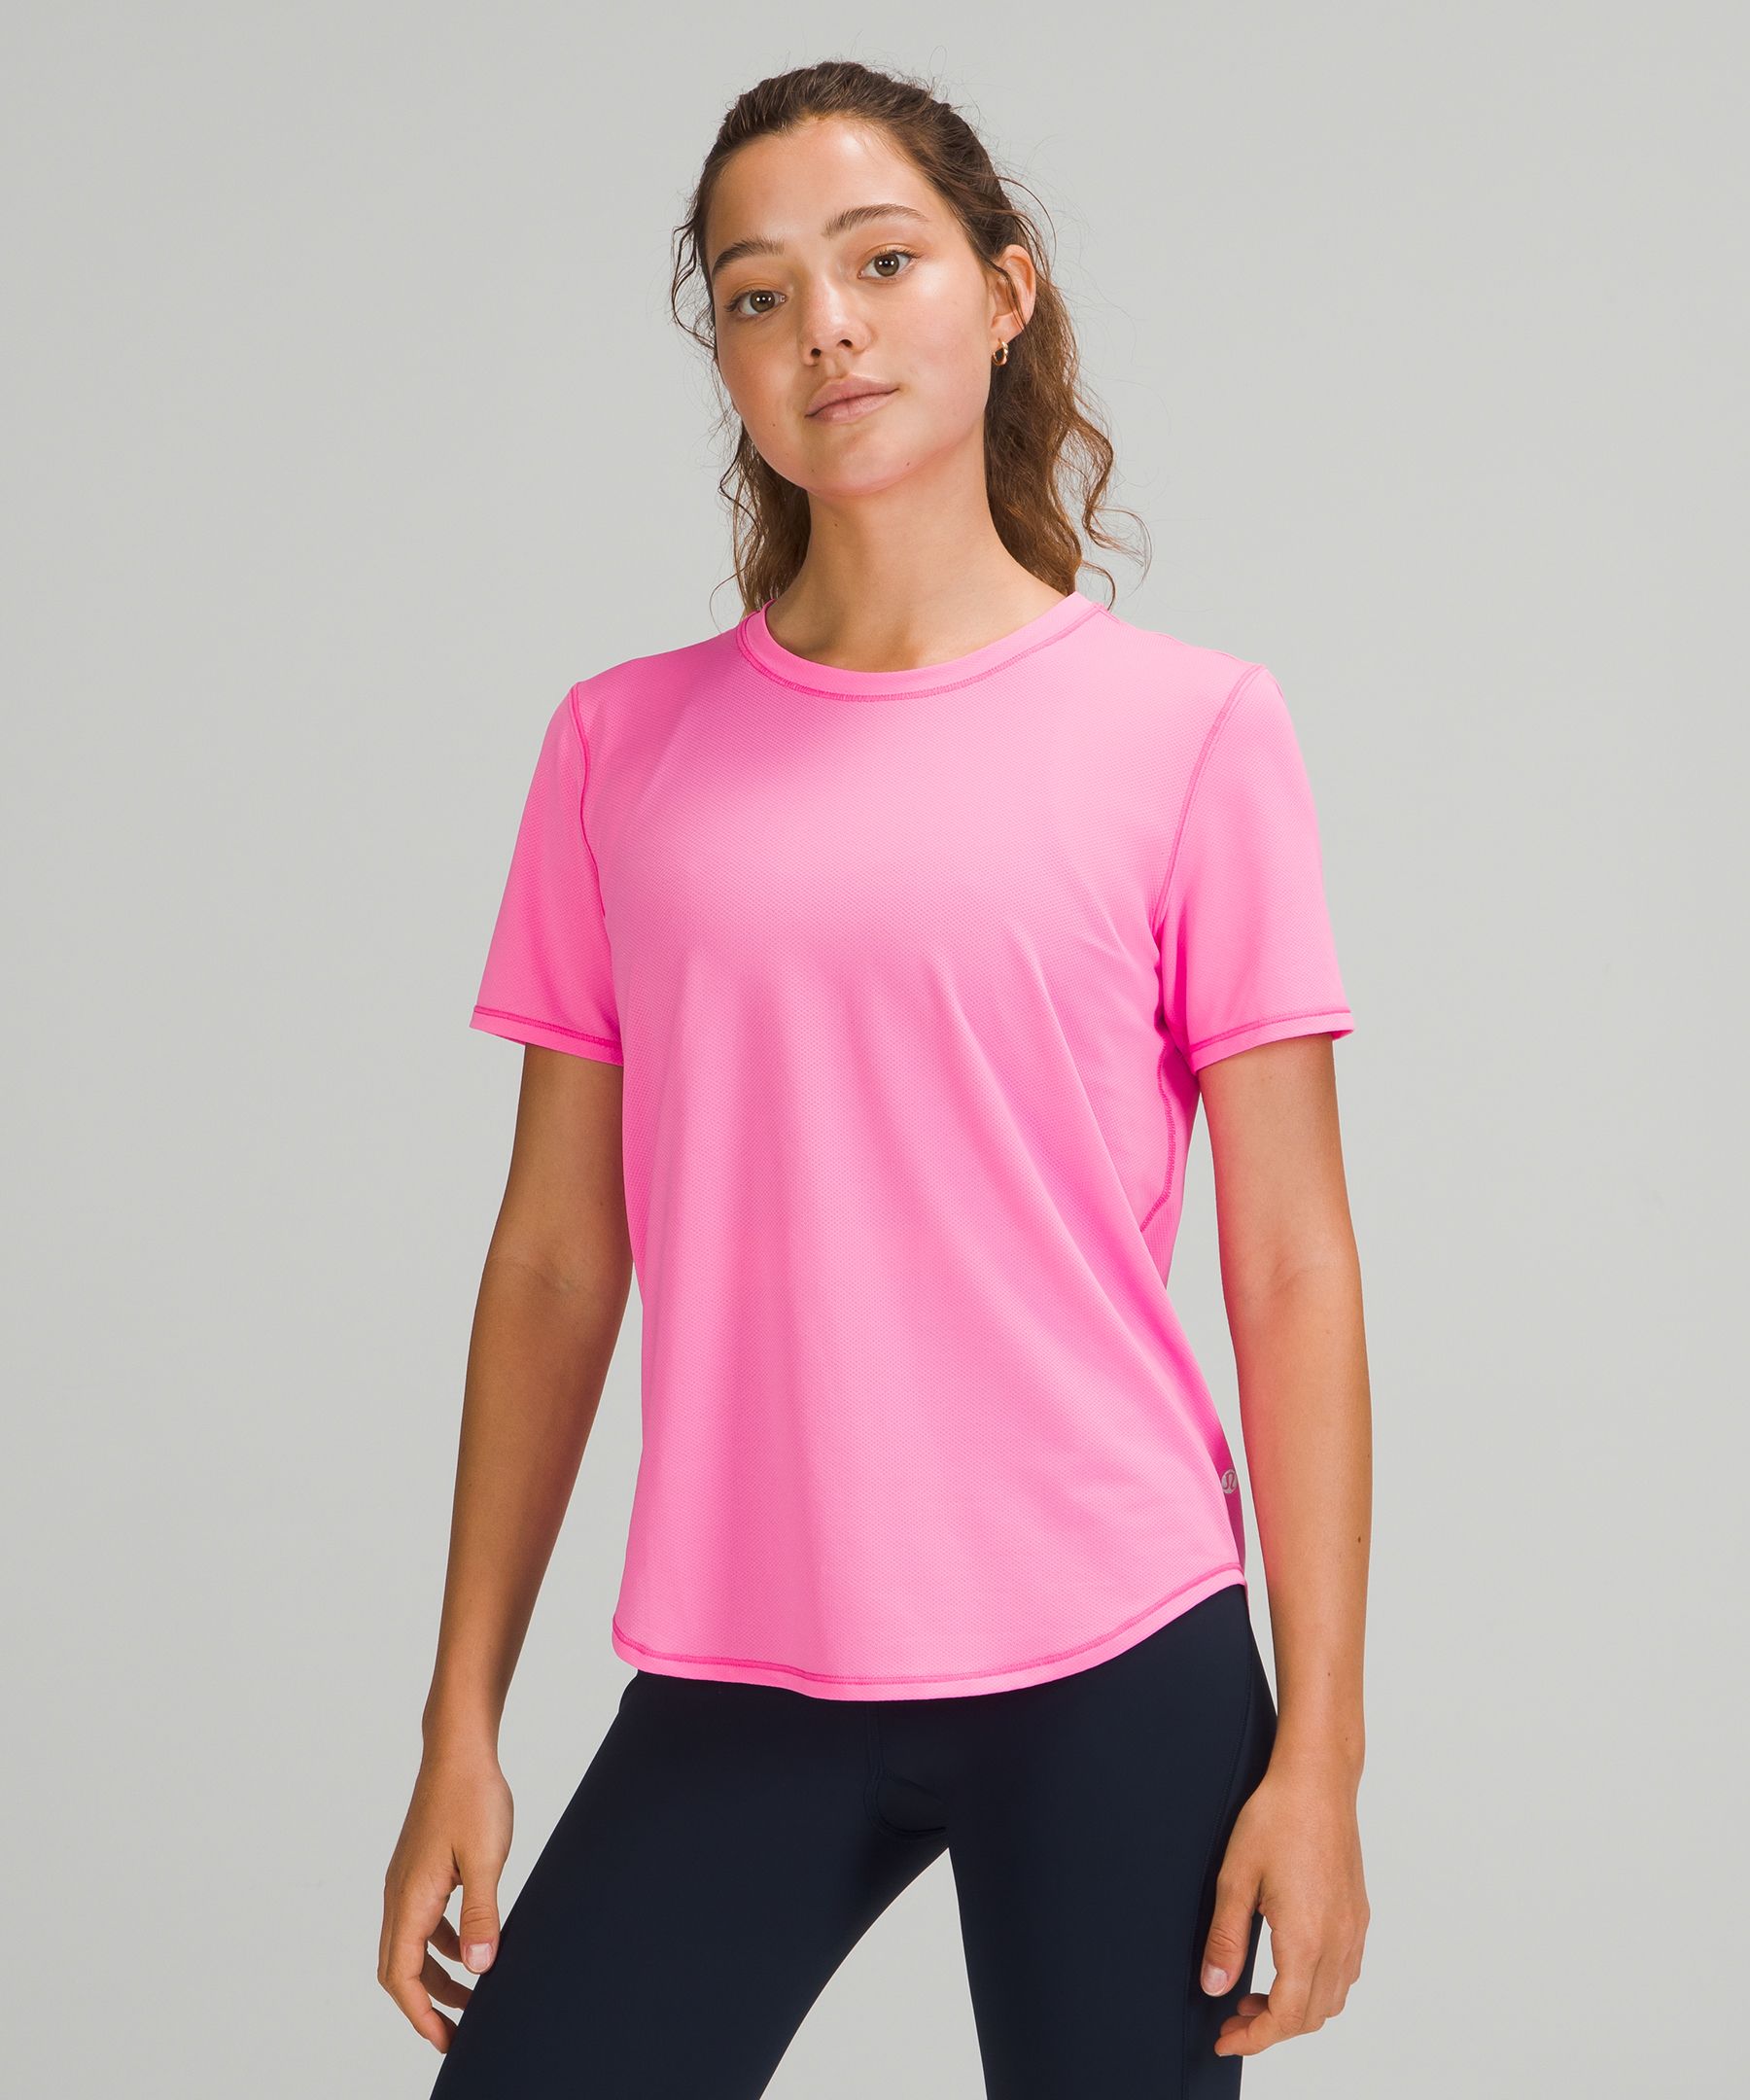 Lululemon High-neck Running And Training T-shirt In Pow Pink Light